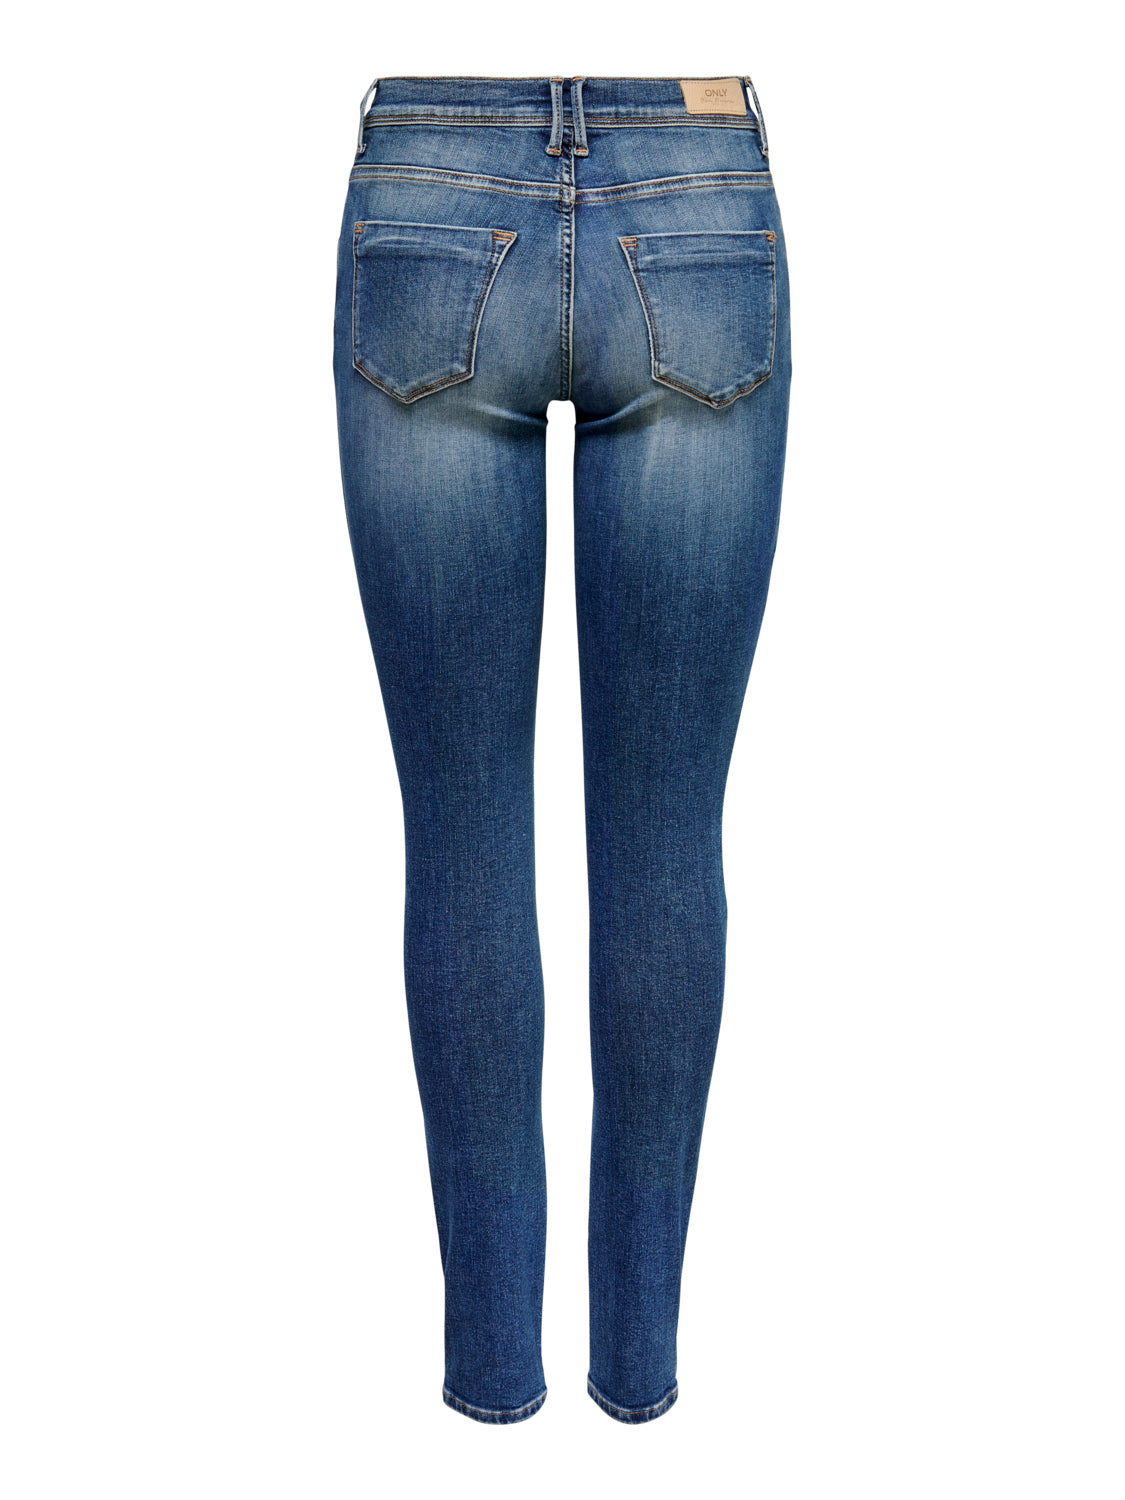 ONLSHAPE Jeans - Medium Blue Denim